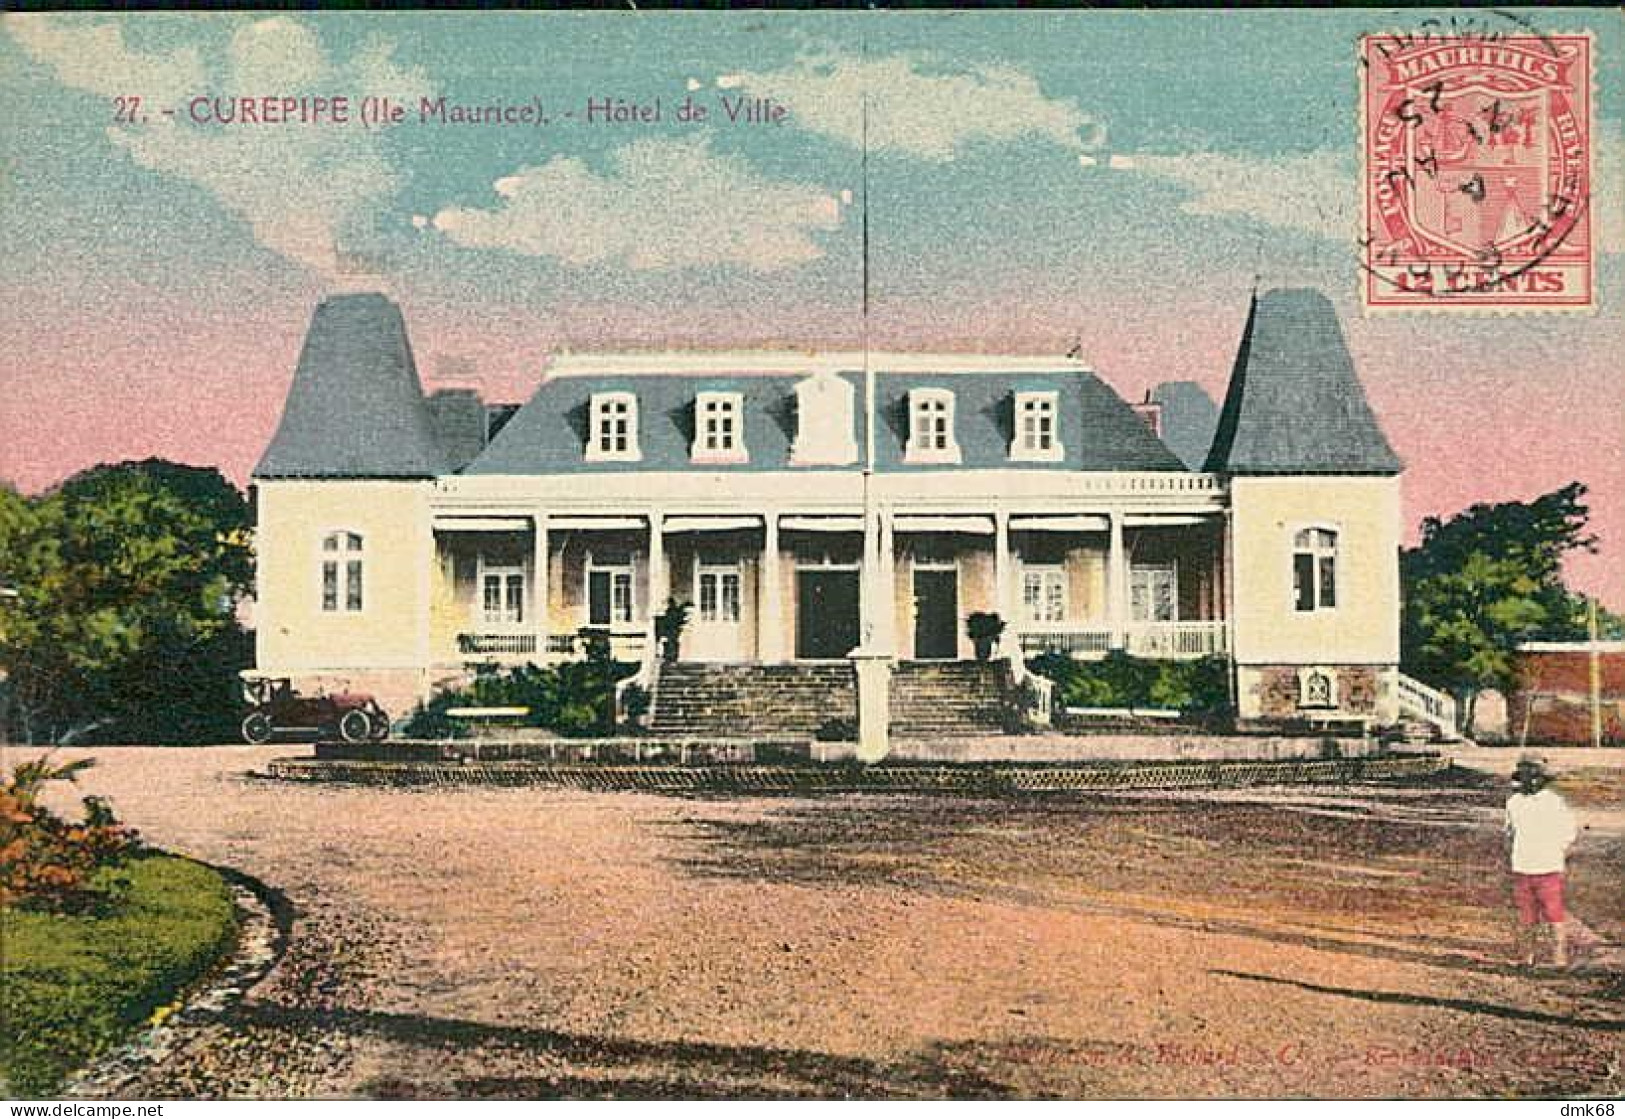 AFRICA - MAURITIUS / ILE MAURICE - CUREPIPE - HOTEL DE VILLE PHO. L'ABEILLE - MAILED 1925 / STAMP (12573) - Mauricio